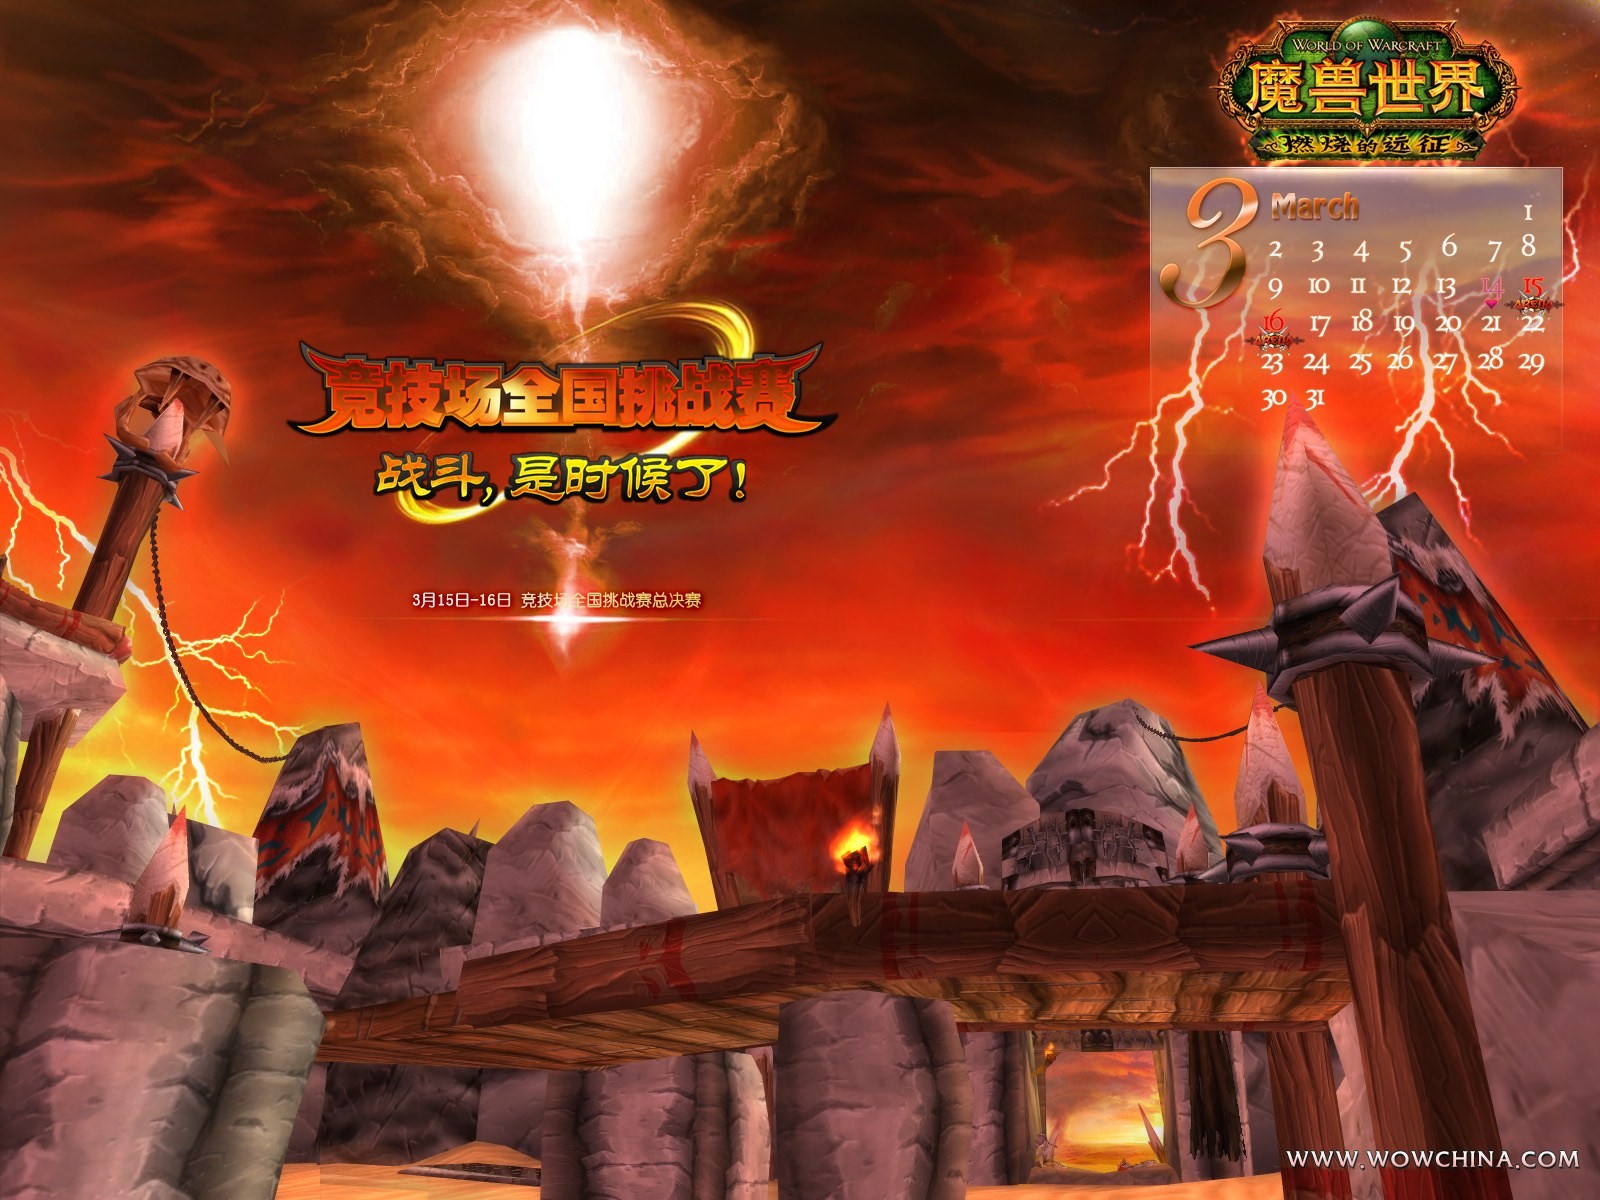 World of Warcraft: fondo de pantalla oficial de The Burning Crusade (2) #16 - 1600x1200